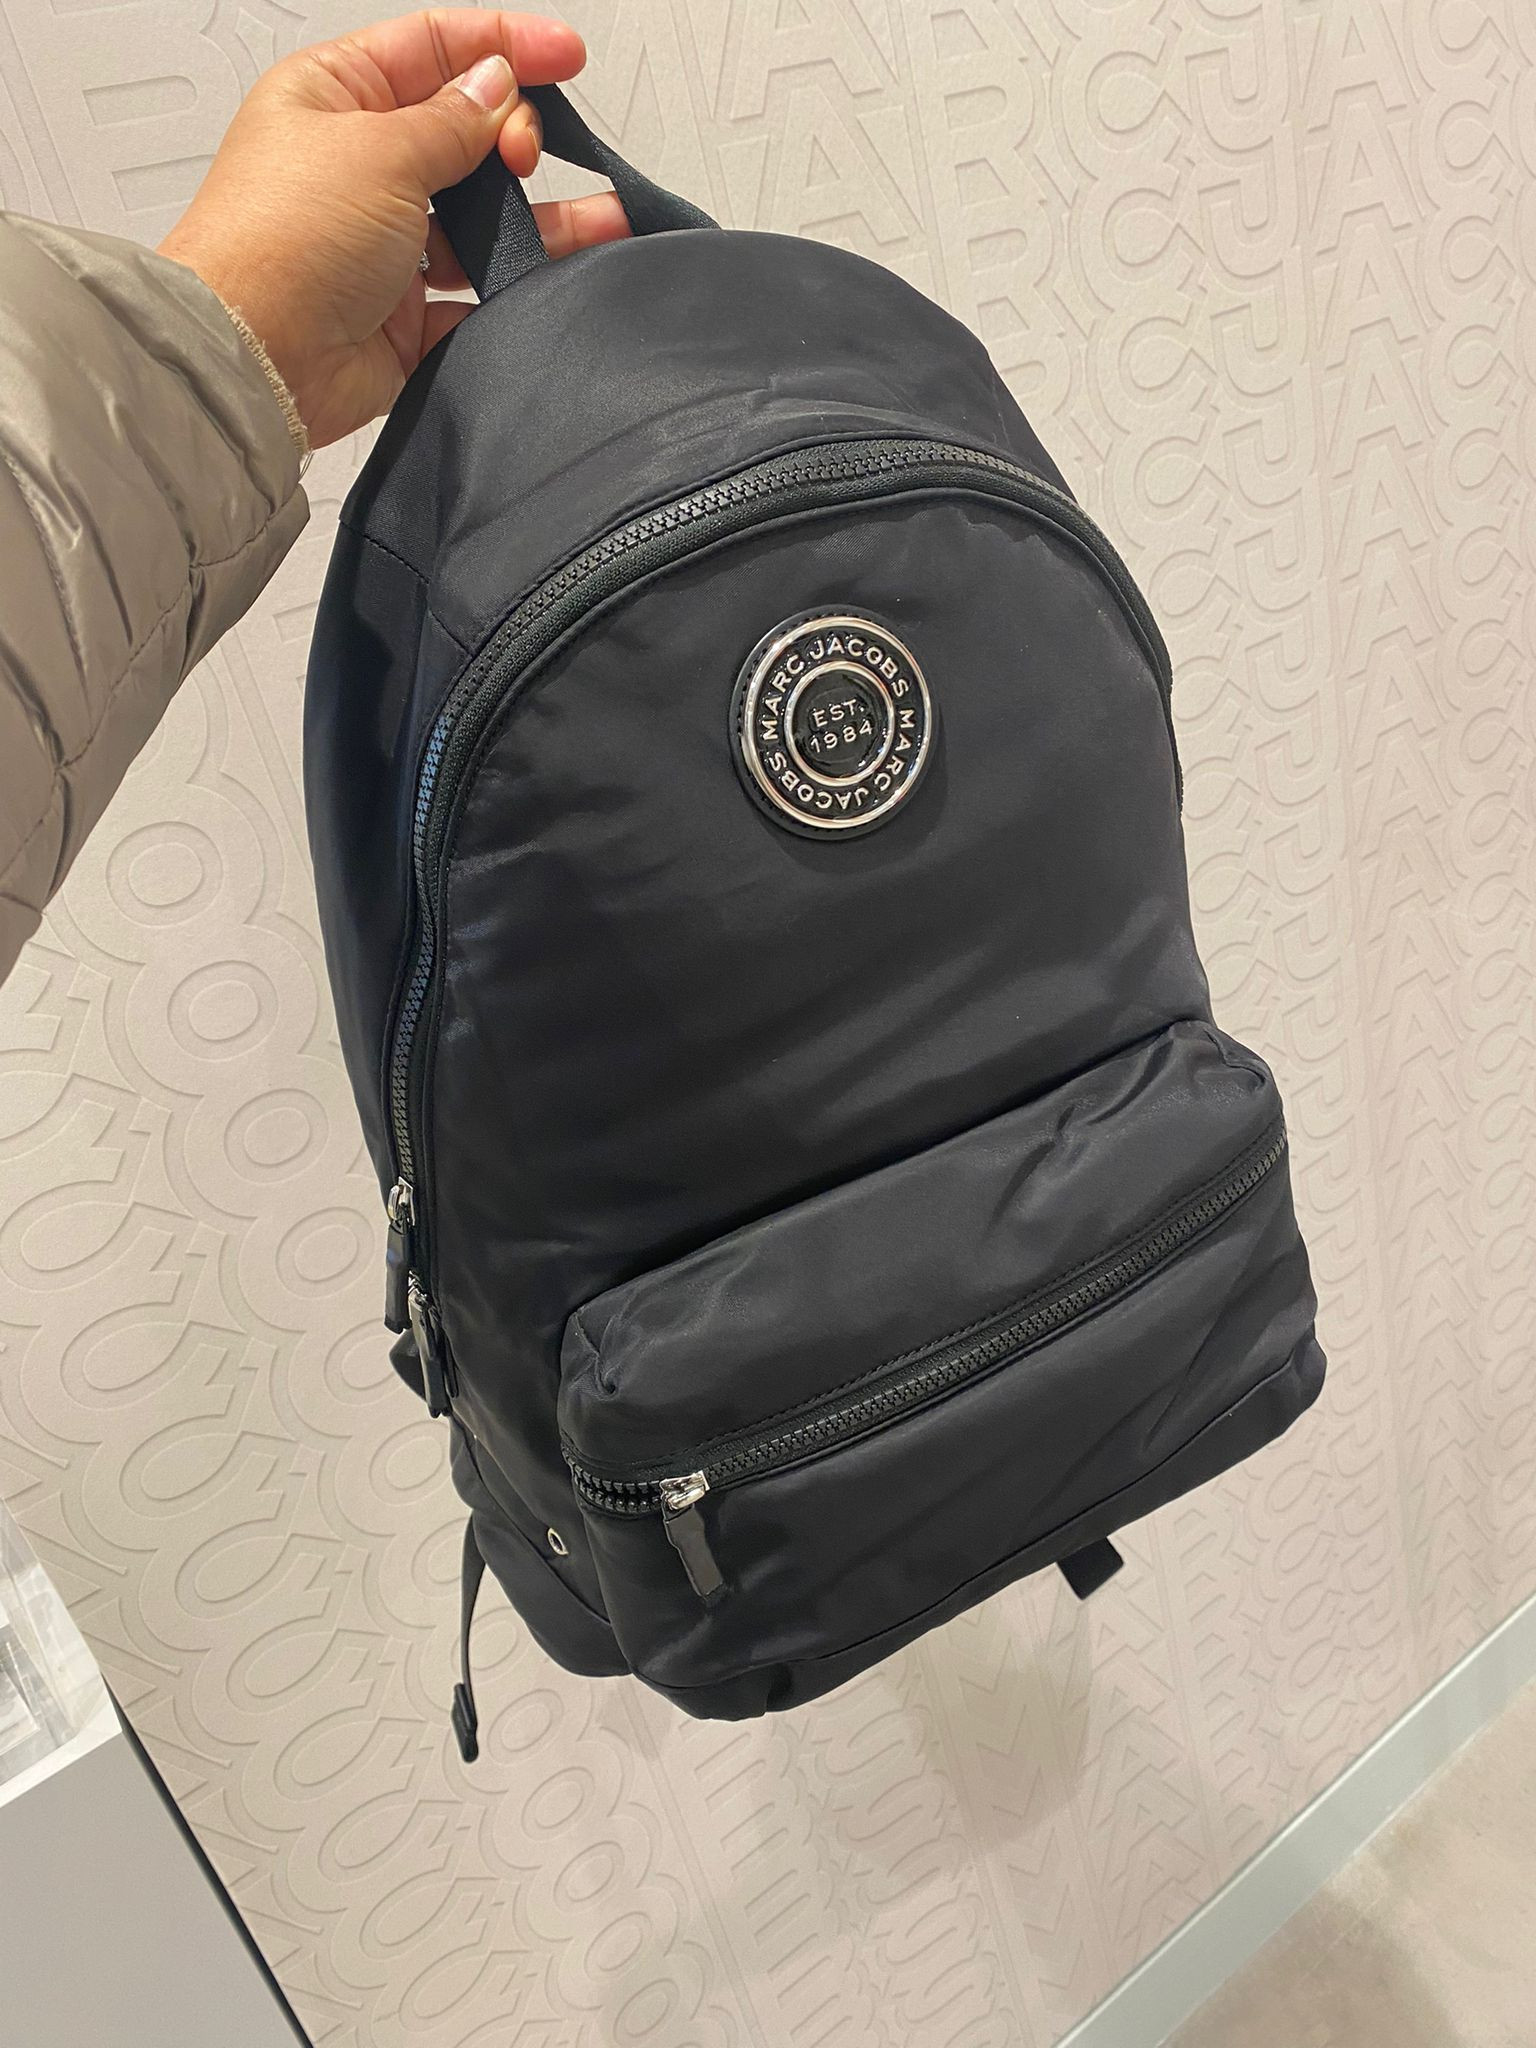 Marc Jacobs Backpack - Black - 4S3HBP002H02-001 / Large